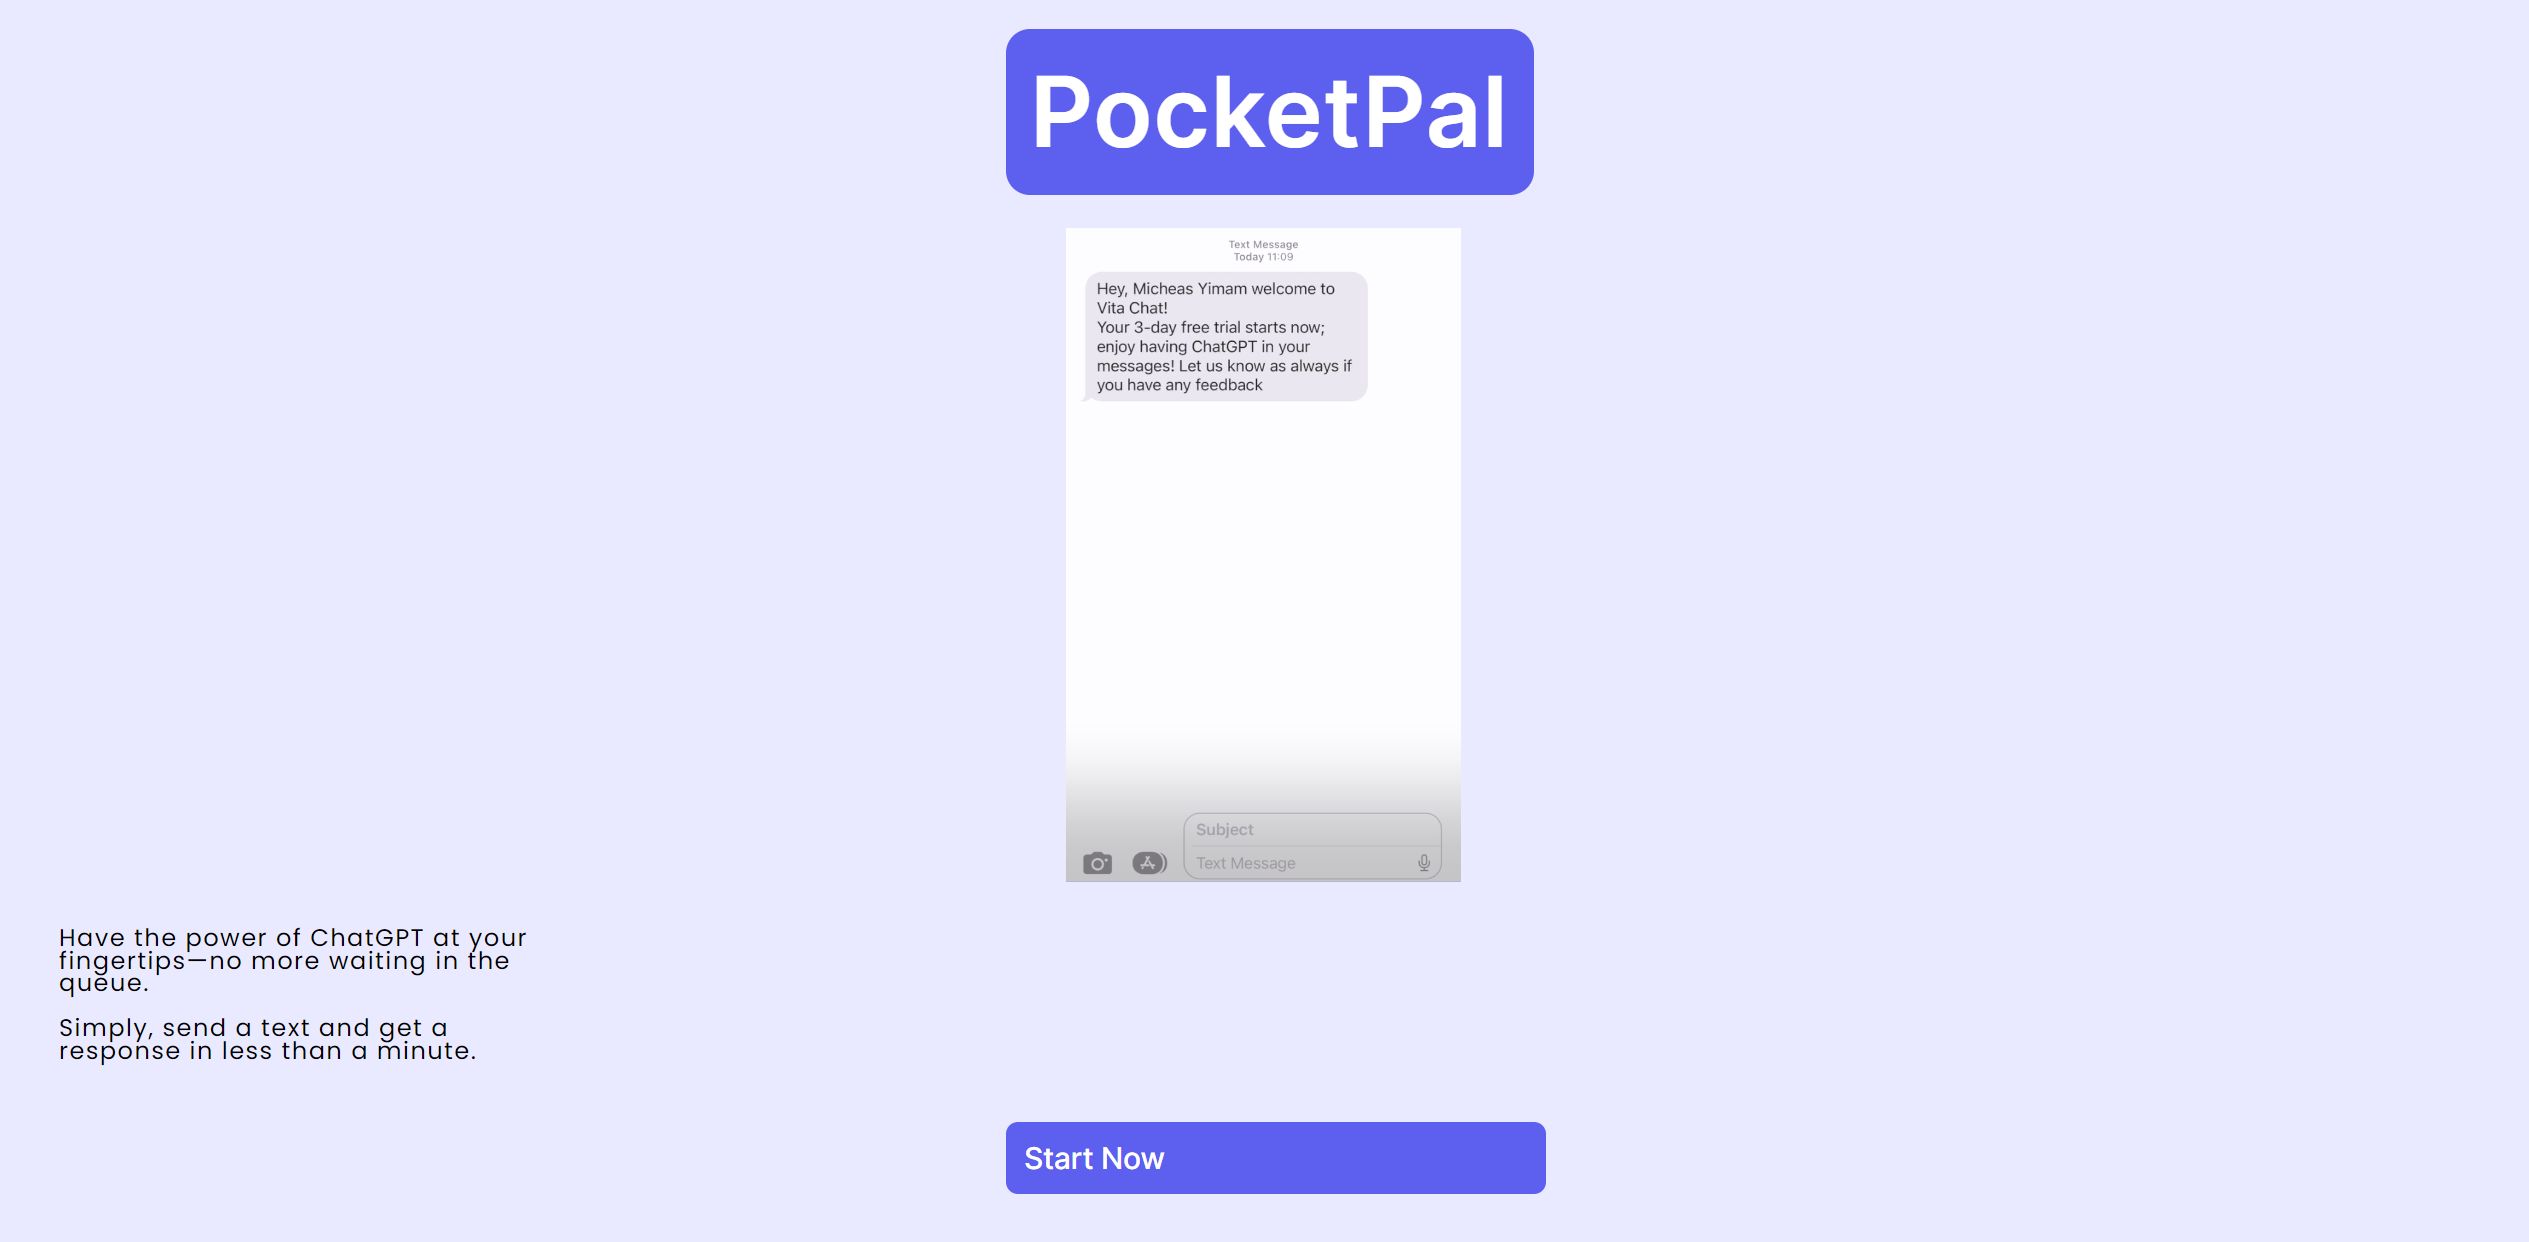 PocketPal